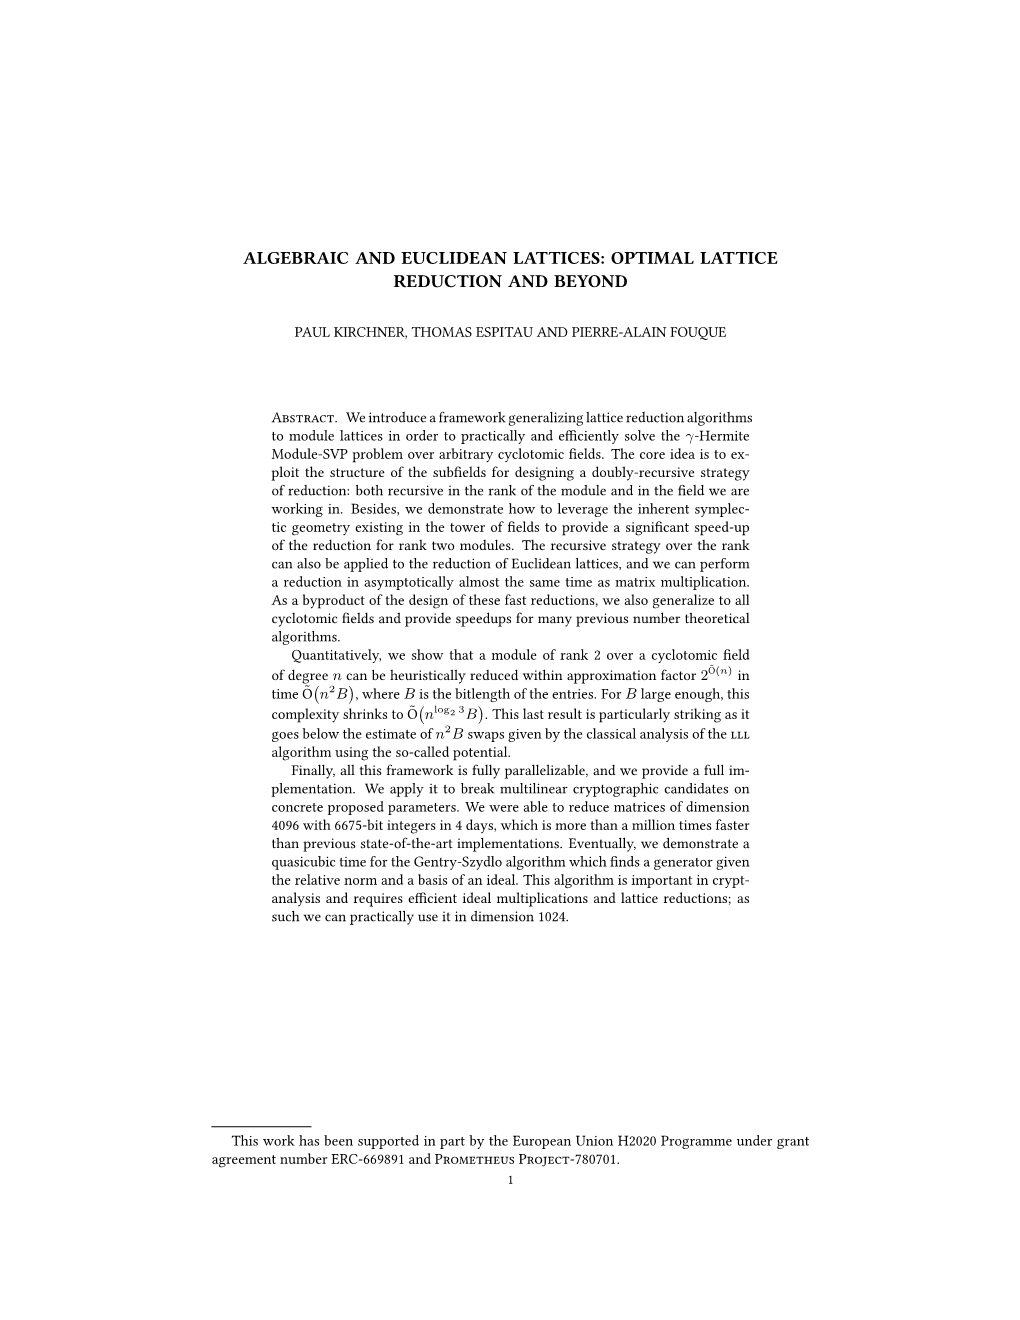 Algebraic and Euclidean Lattices: Optimal Lattice Reduction and Beyond